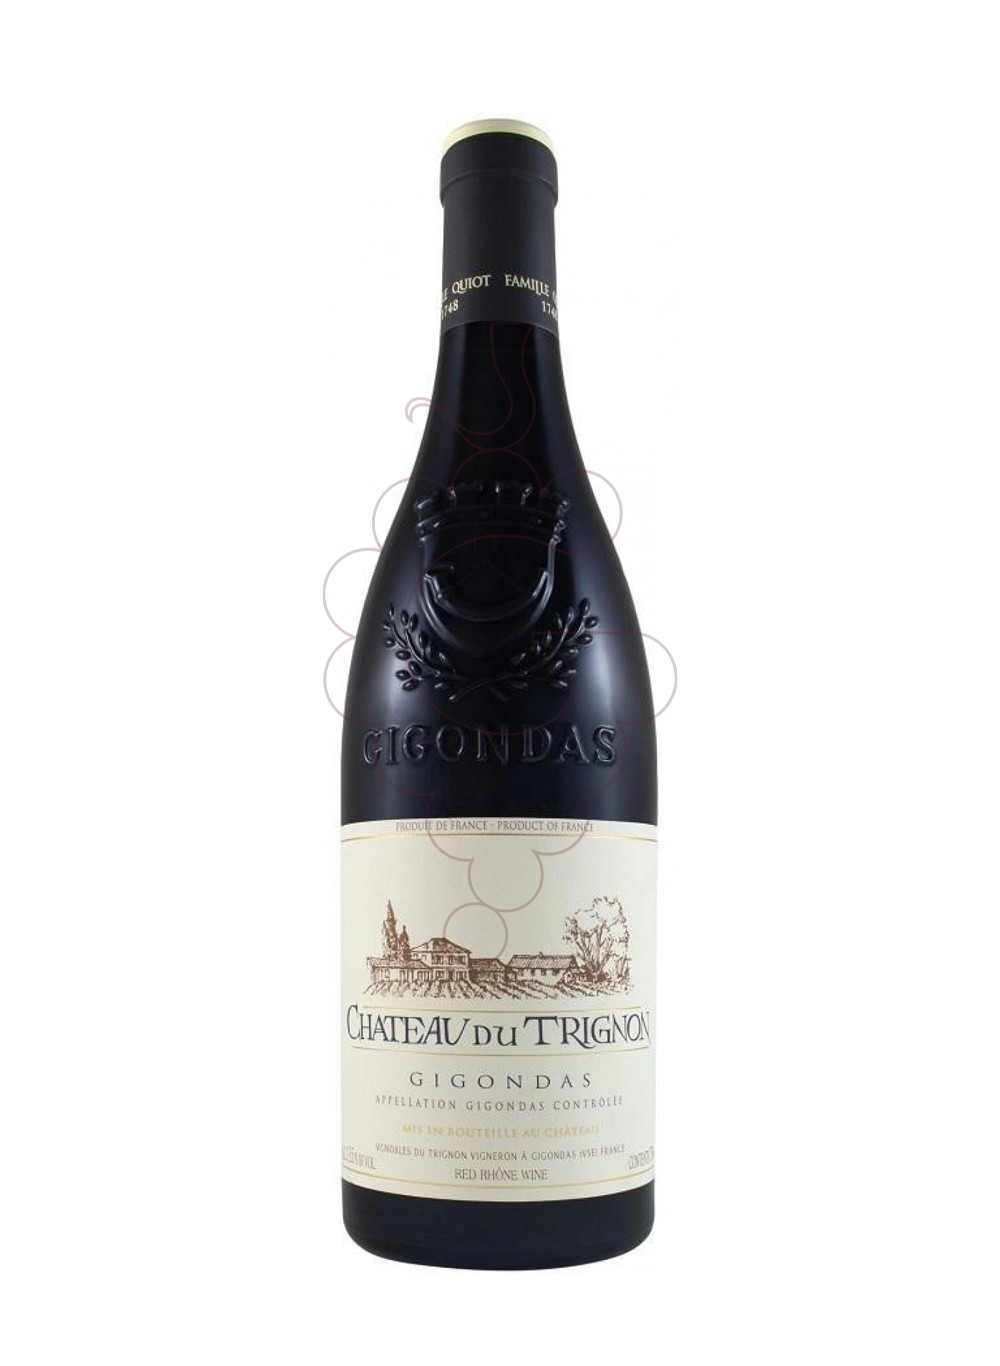 Photo Ch. trignon gigondas negre 17 vin rouge